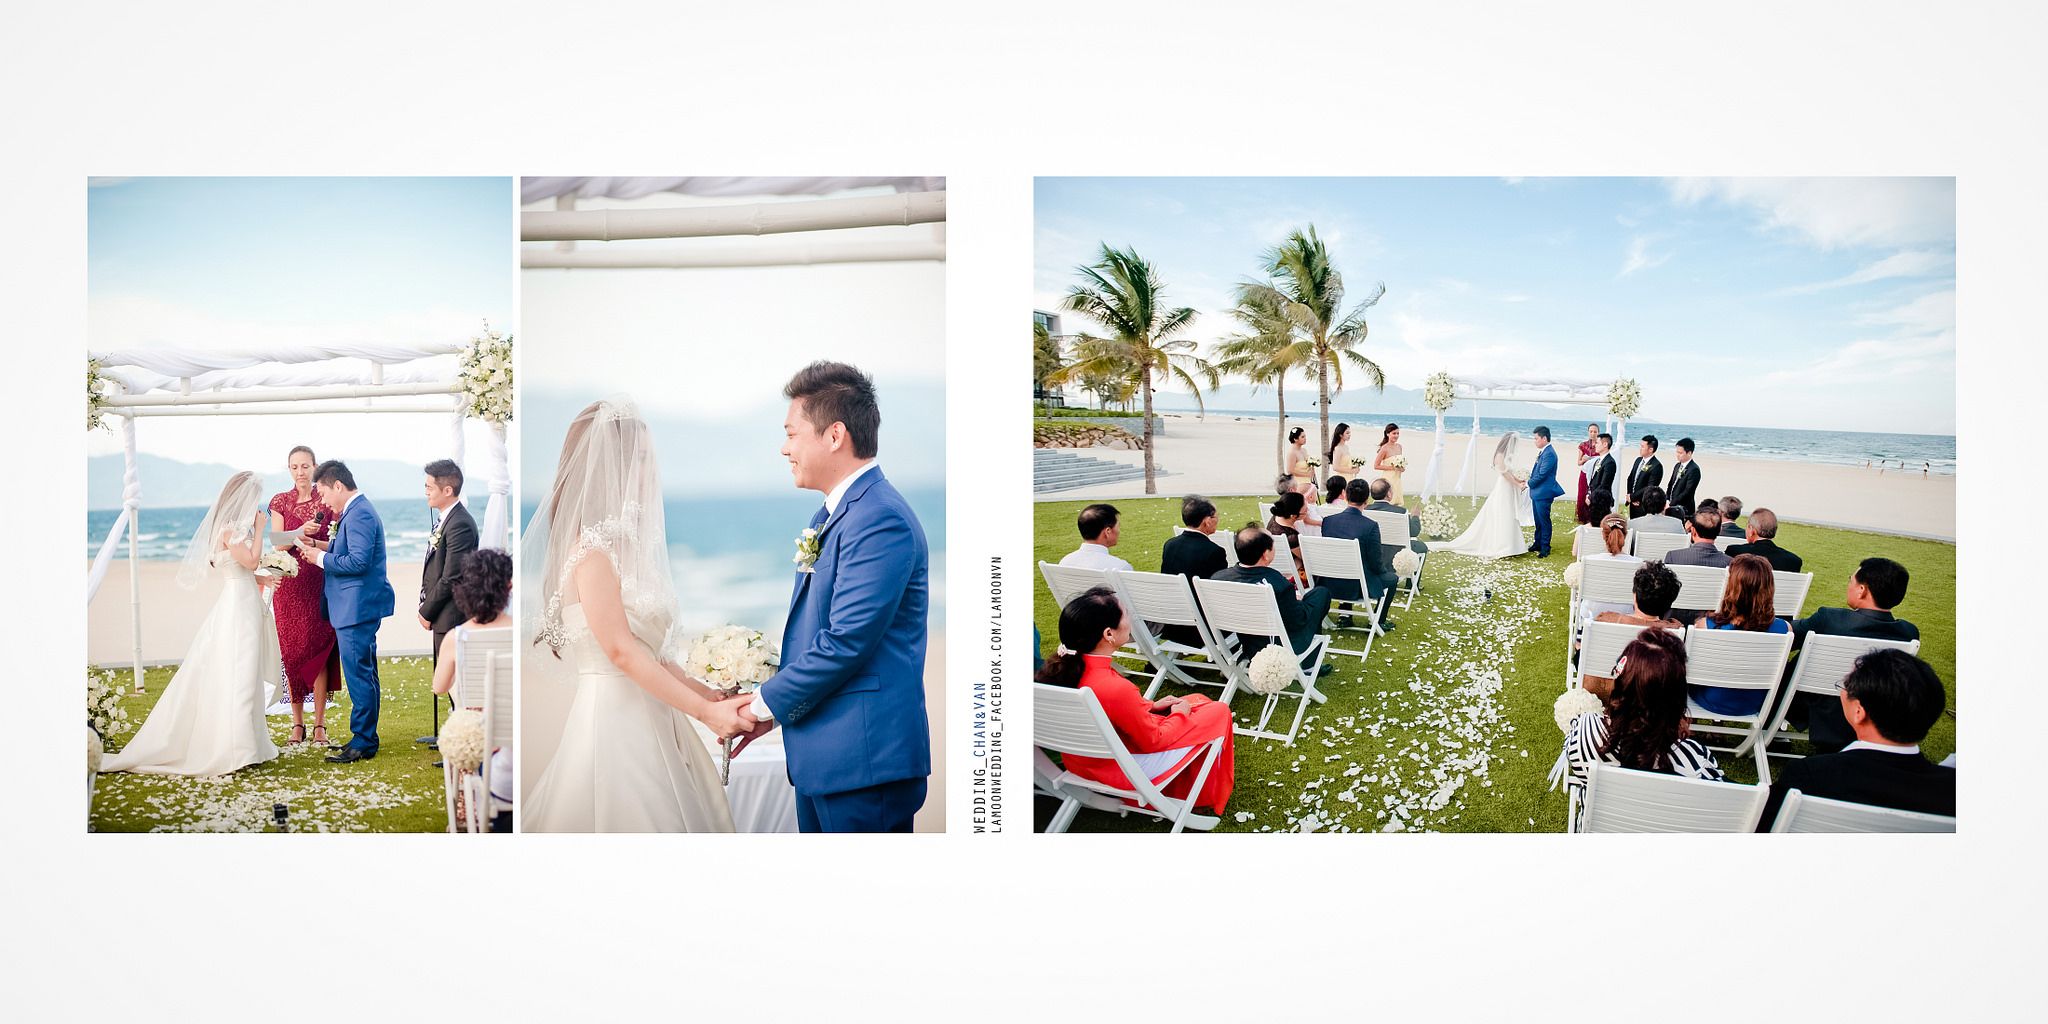 10 best resorts for wedding photos